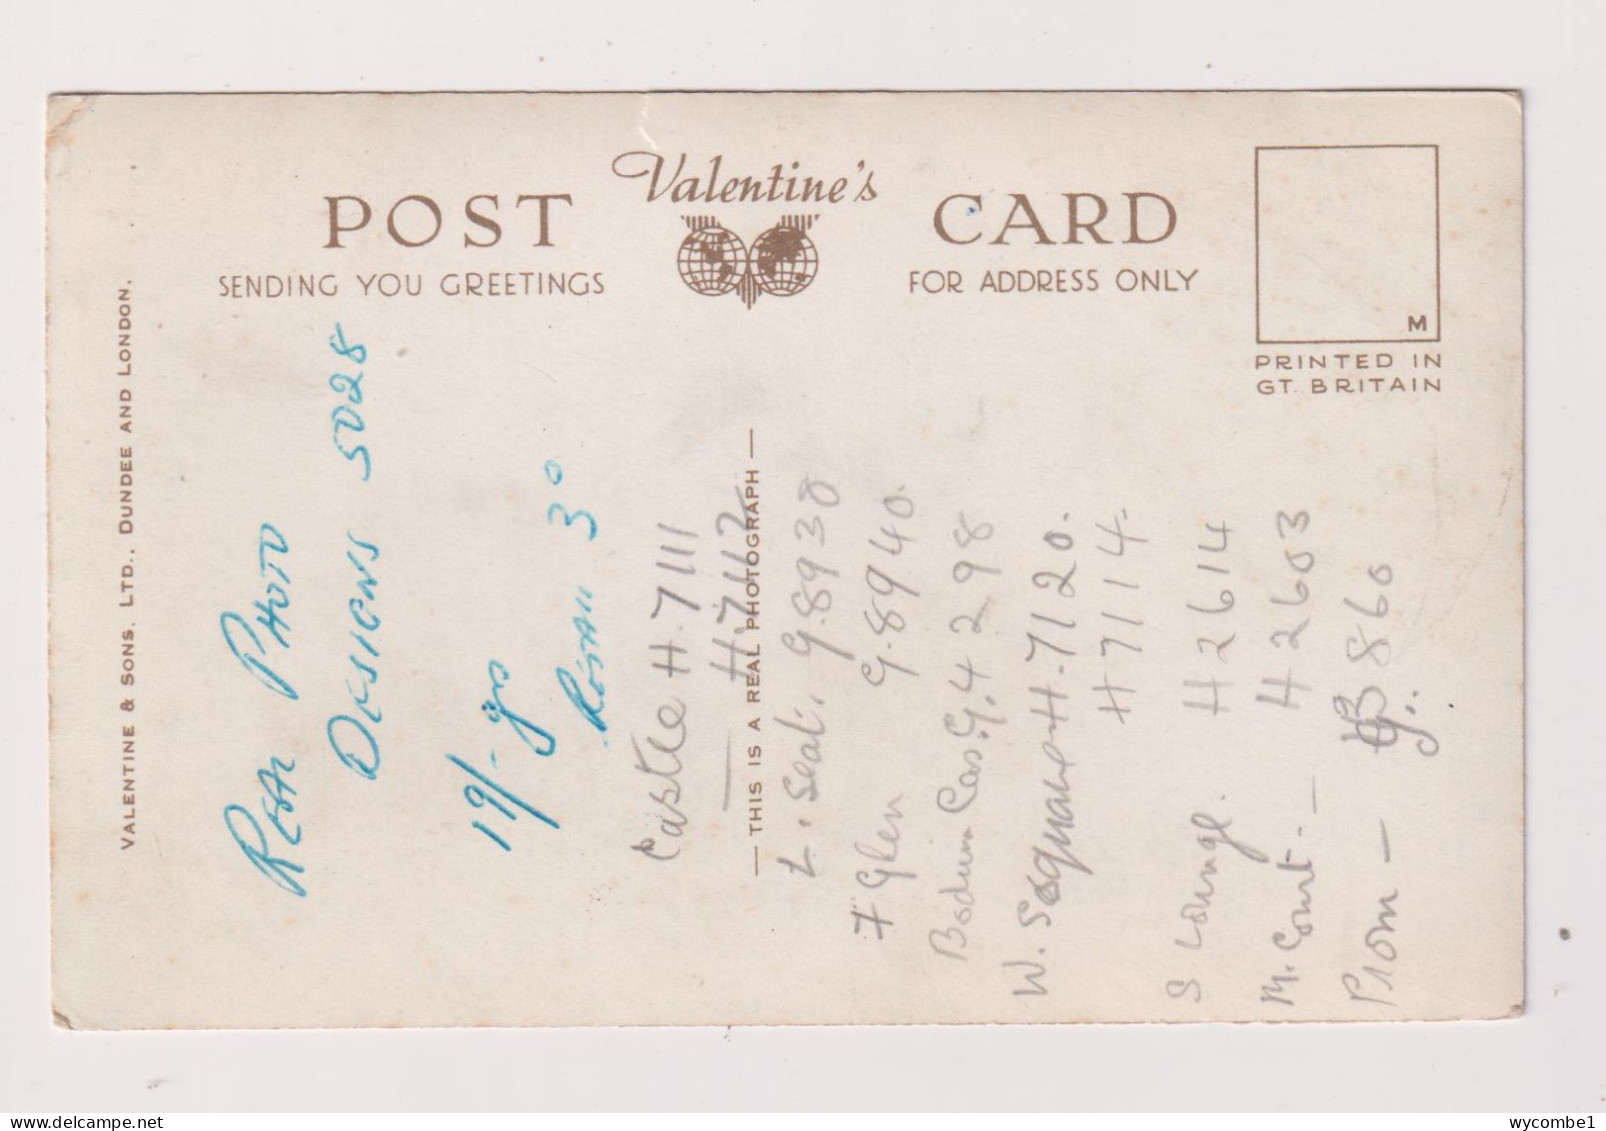 ENGLAND - Hastings From East Hill Used Vintage Postcard - Hastings